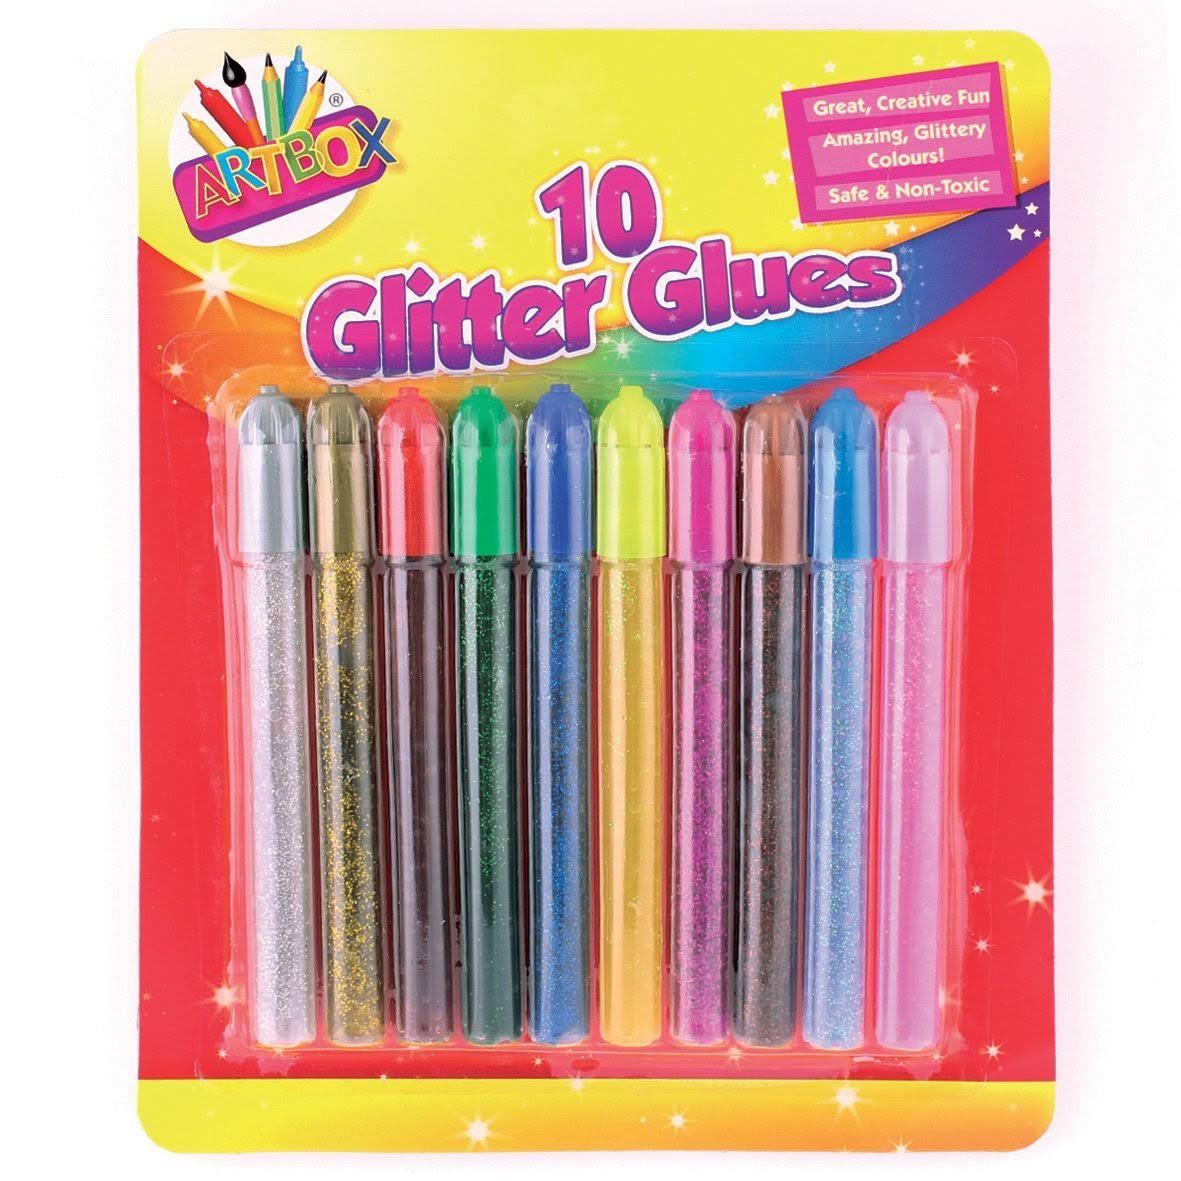 Artbox Glitter Glues - 10 Pack